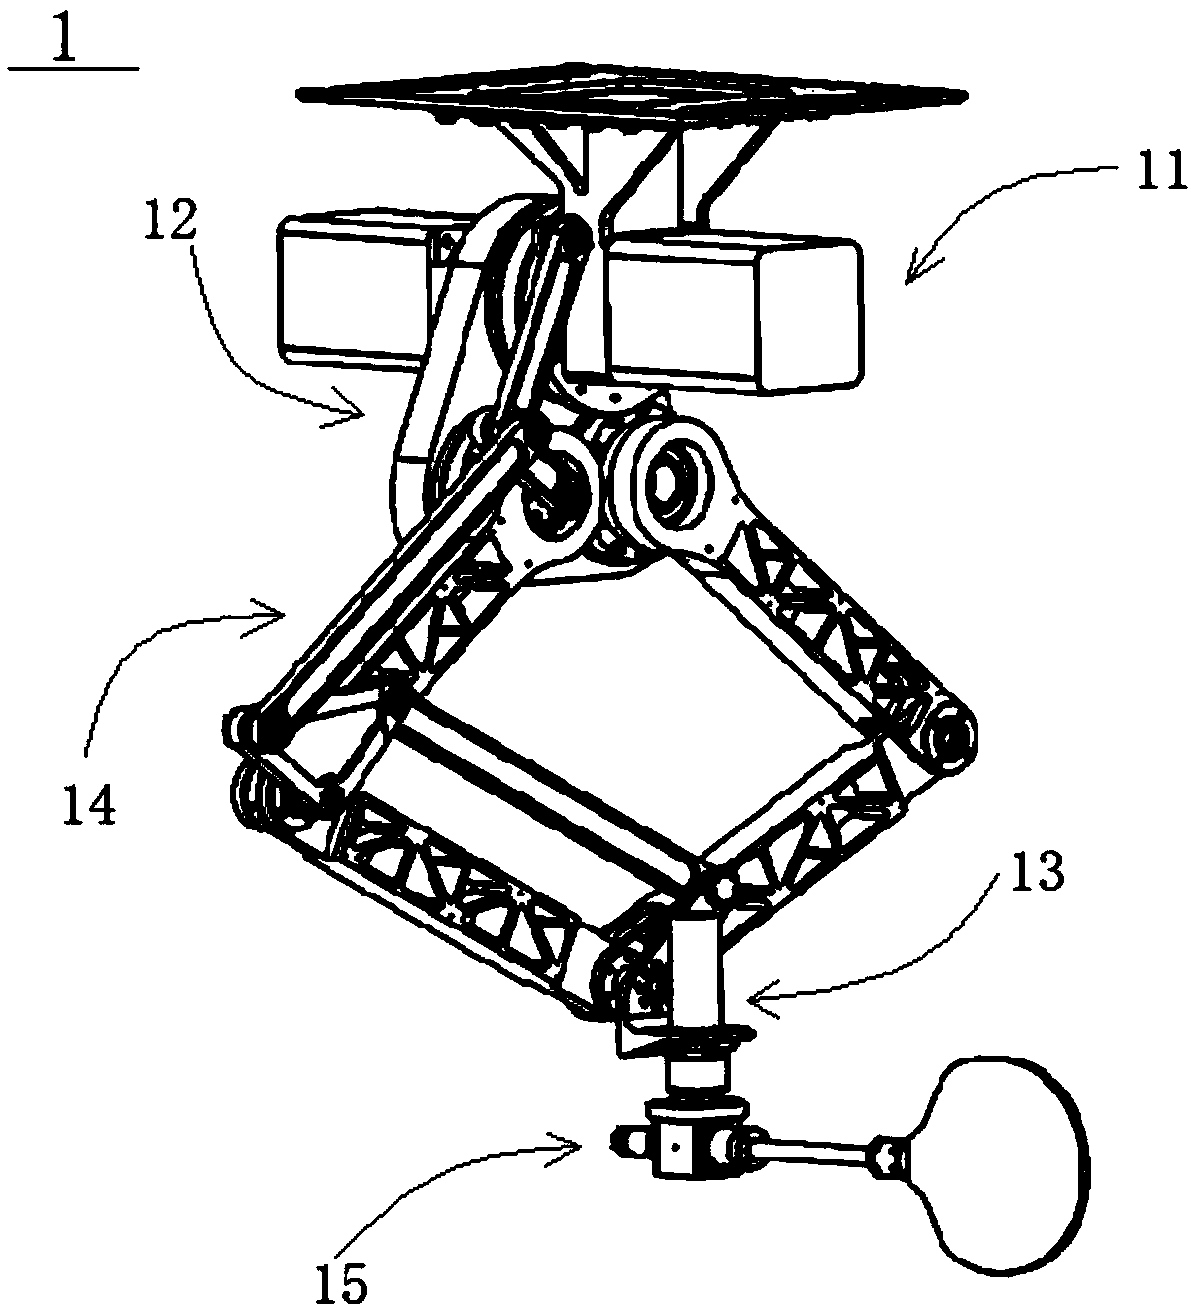 Mechanical arm and table tennis robot with same